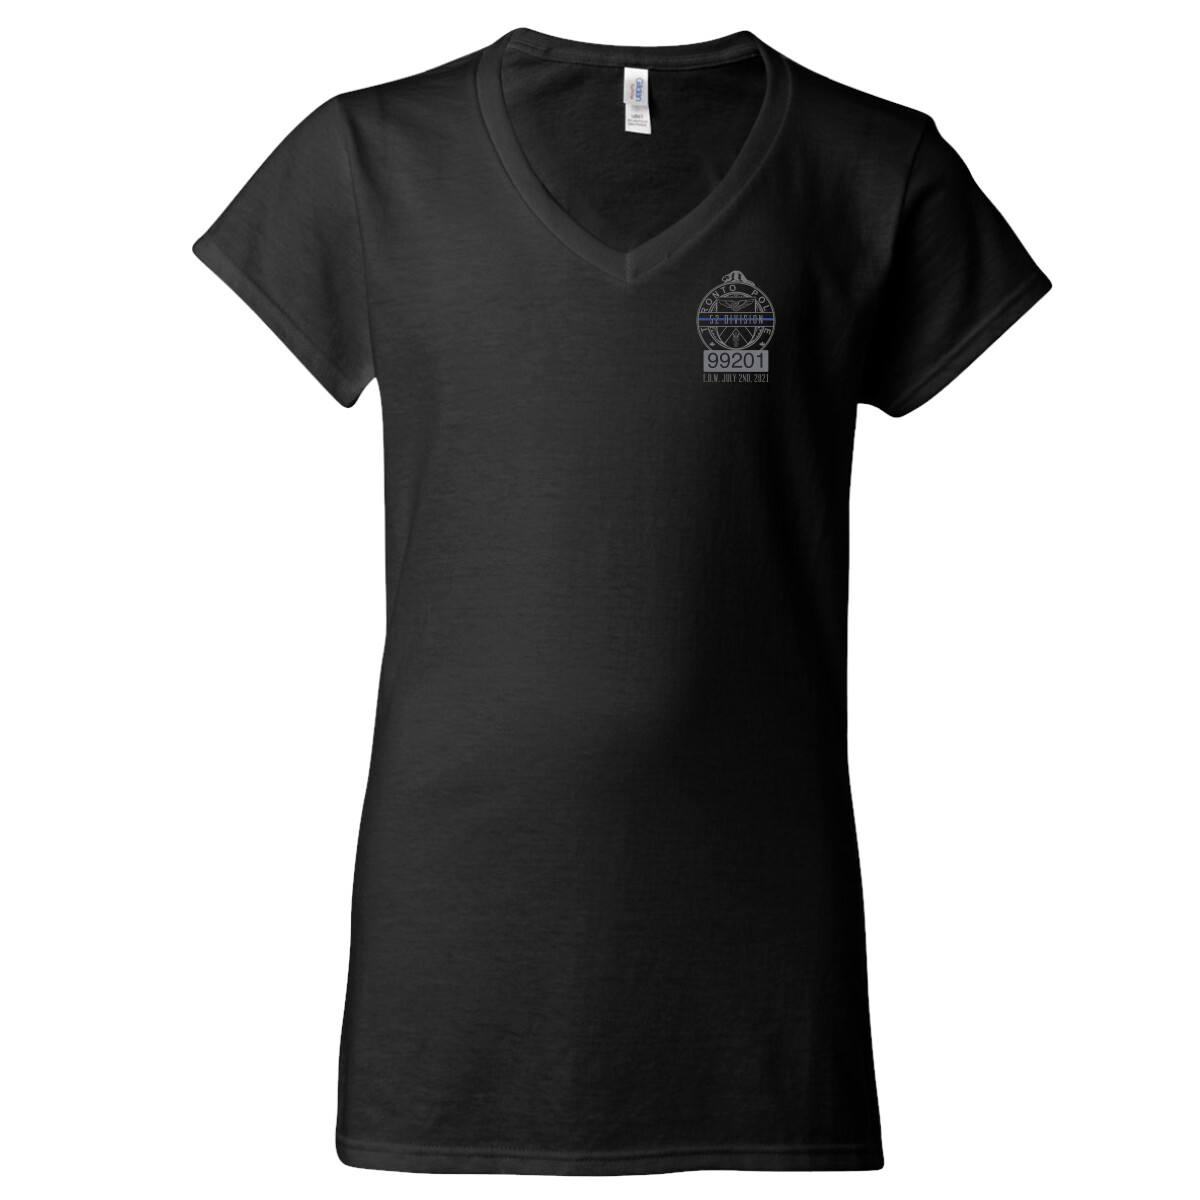 Ladies V-Neck T-Shirt